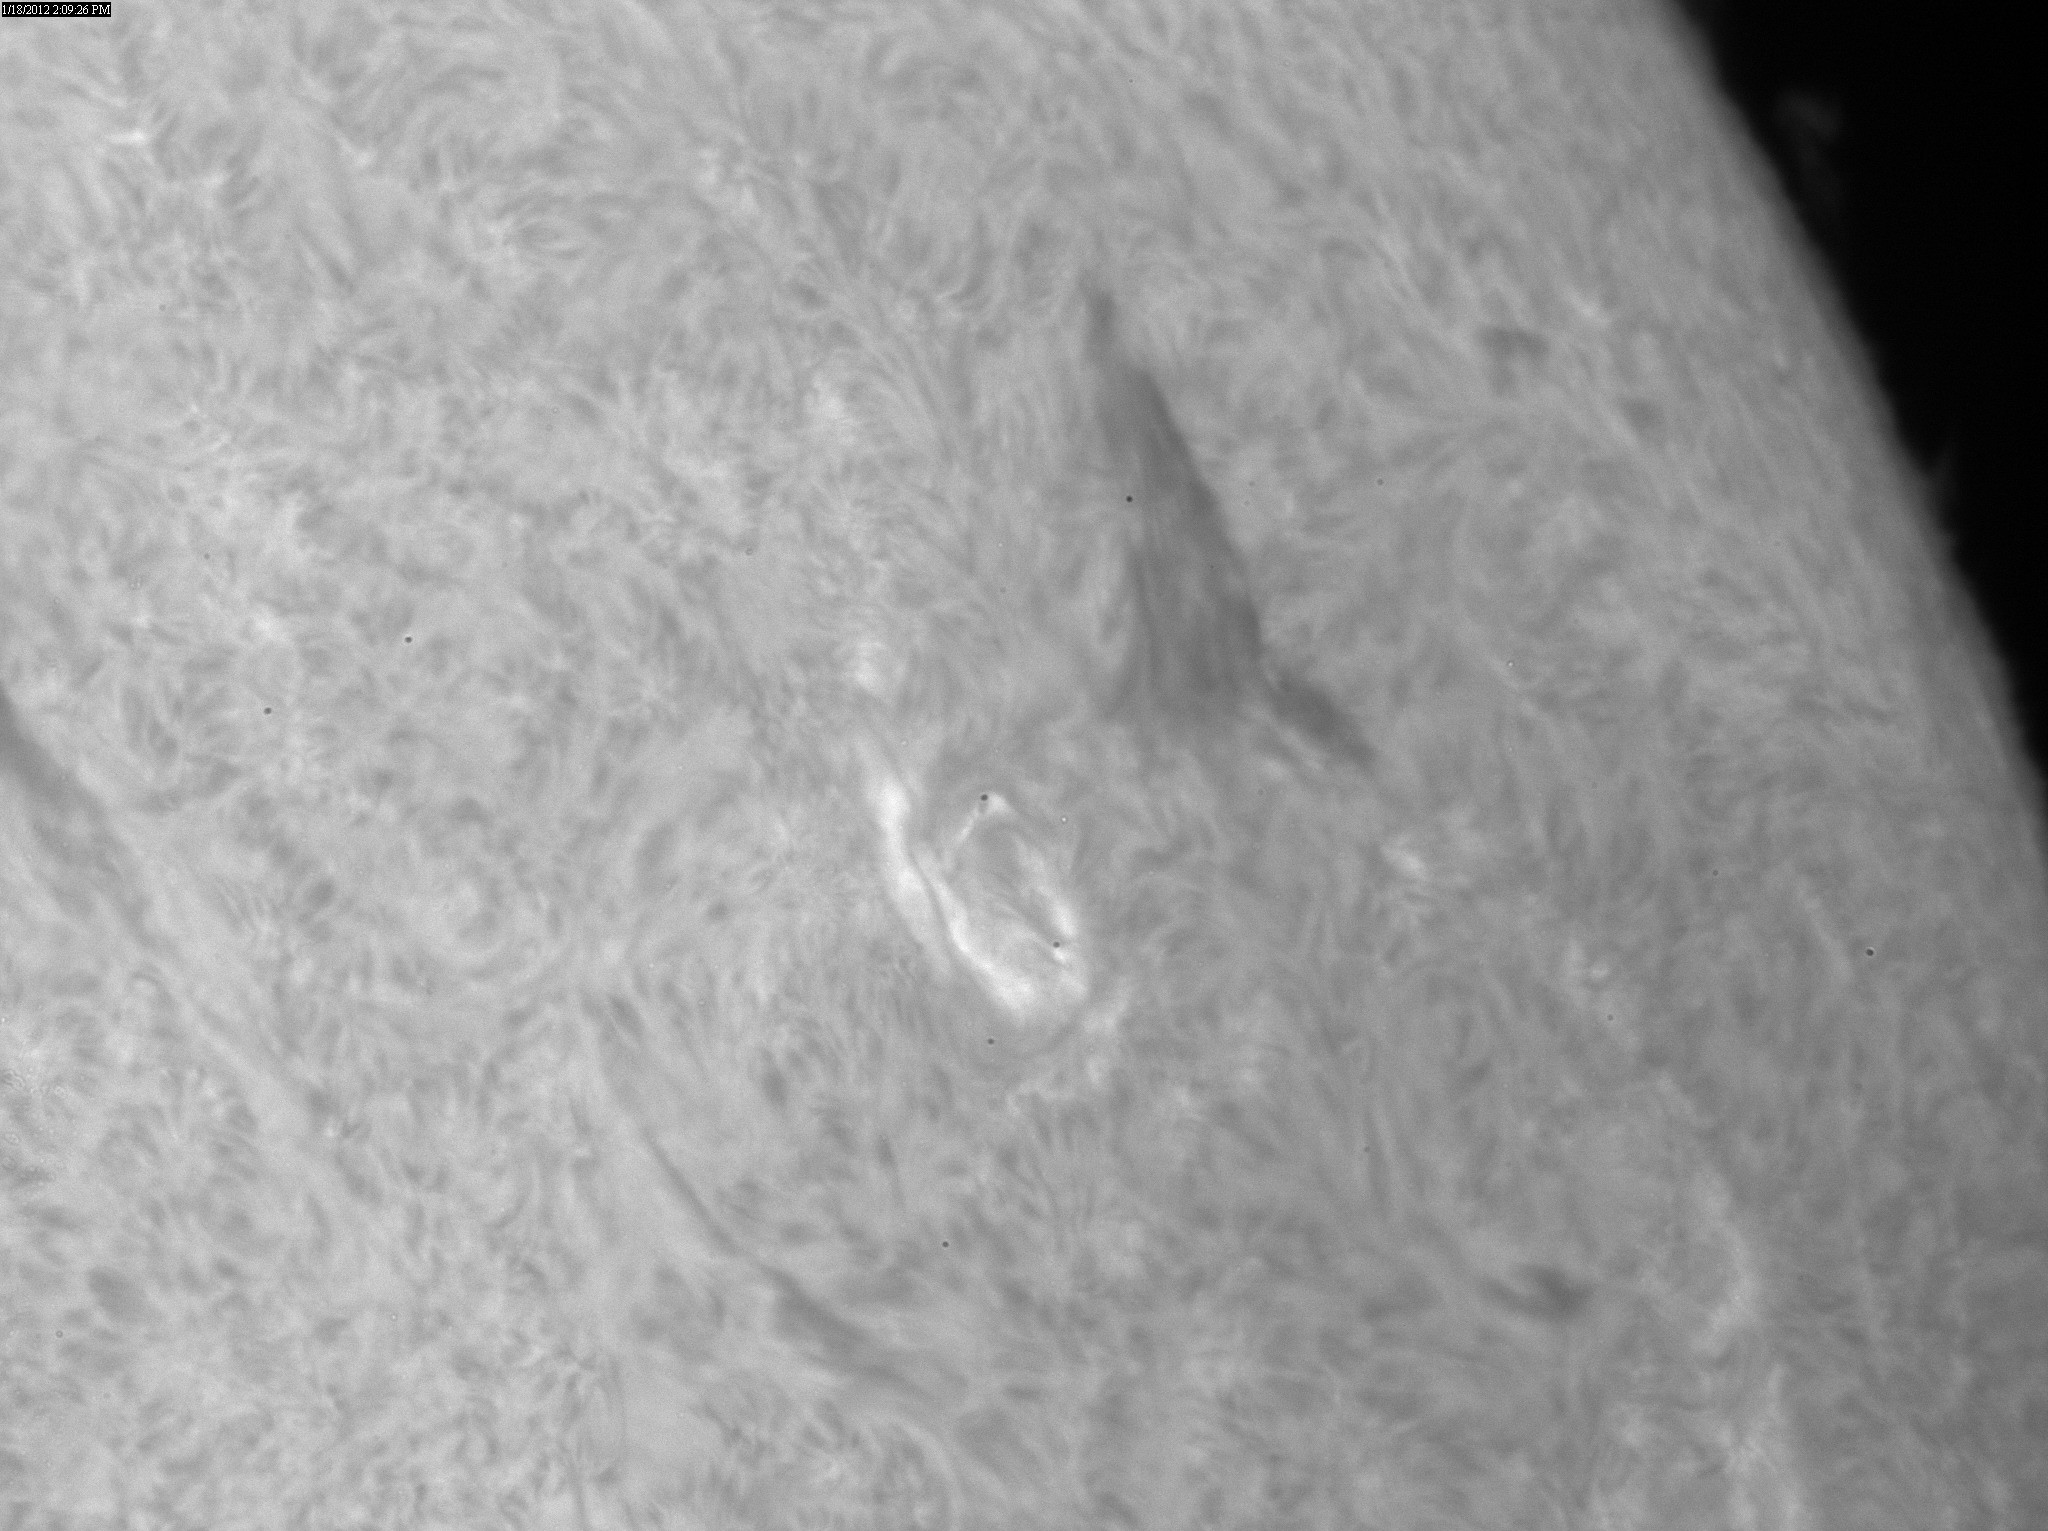 2012 Jan 18 Sun - surface features